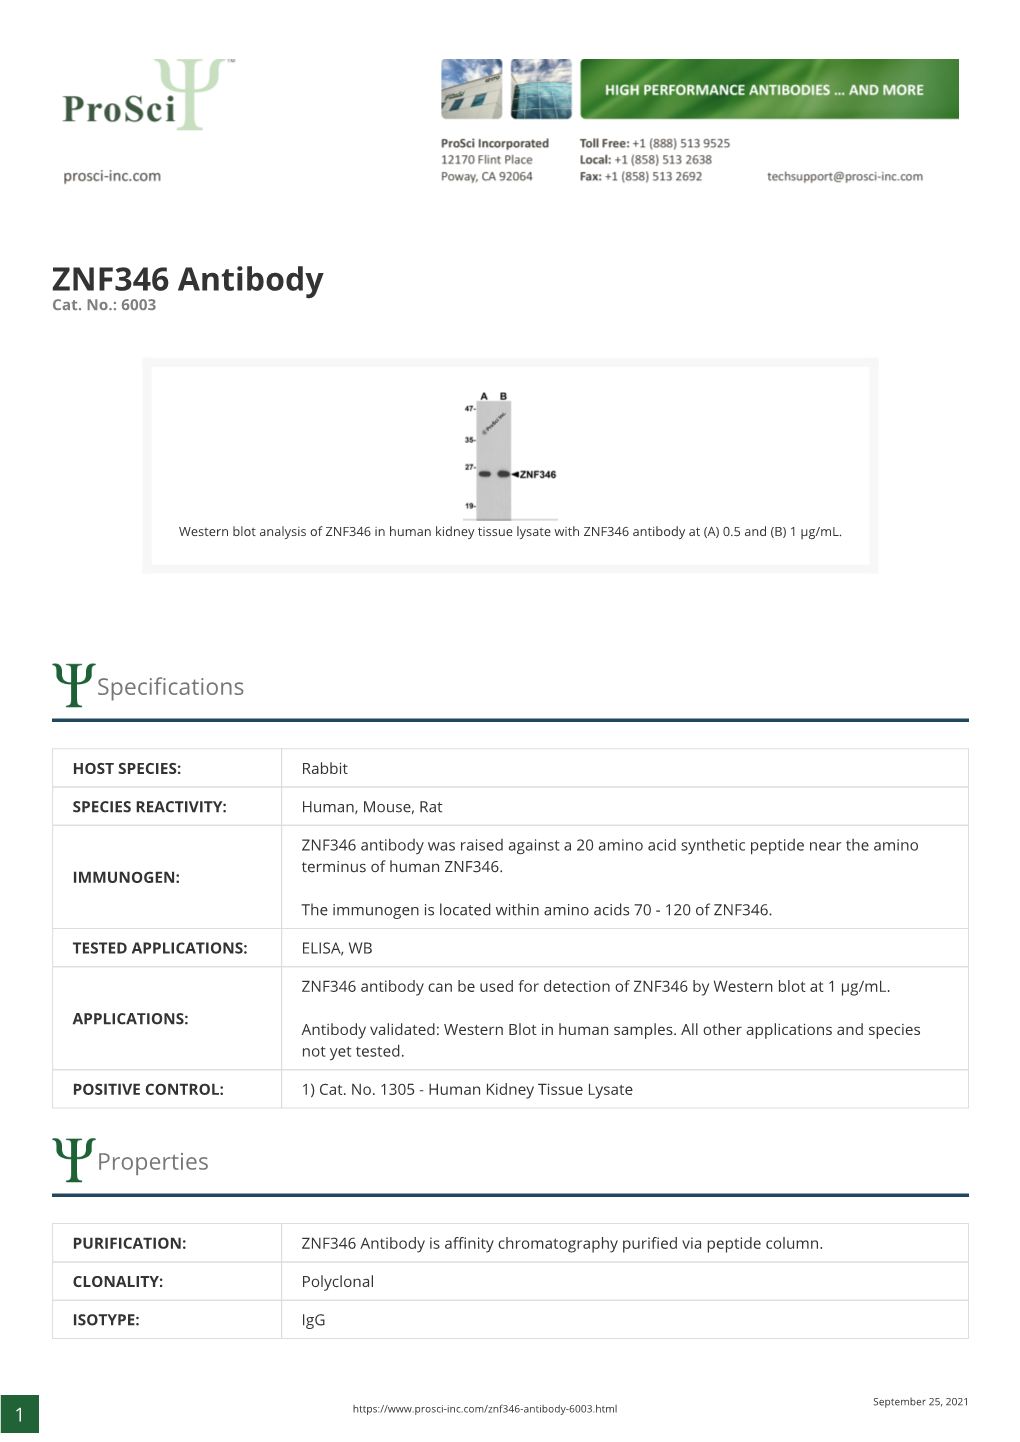 ZNF346 Antibody Cat